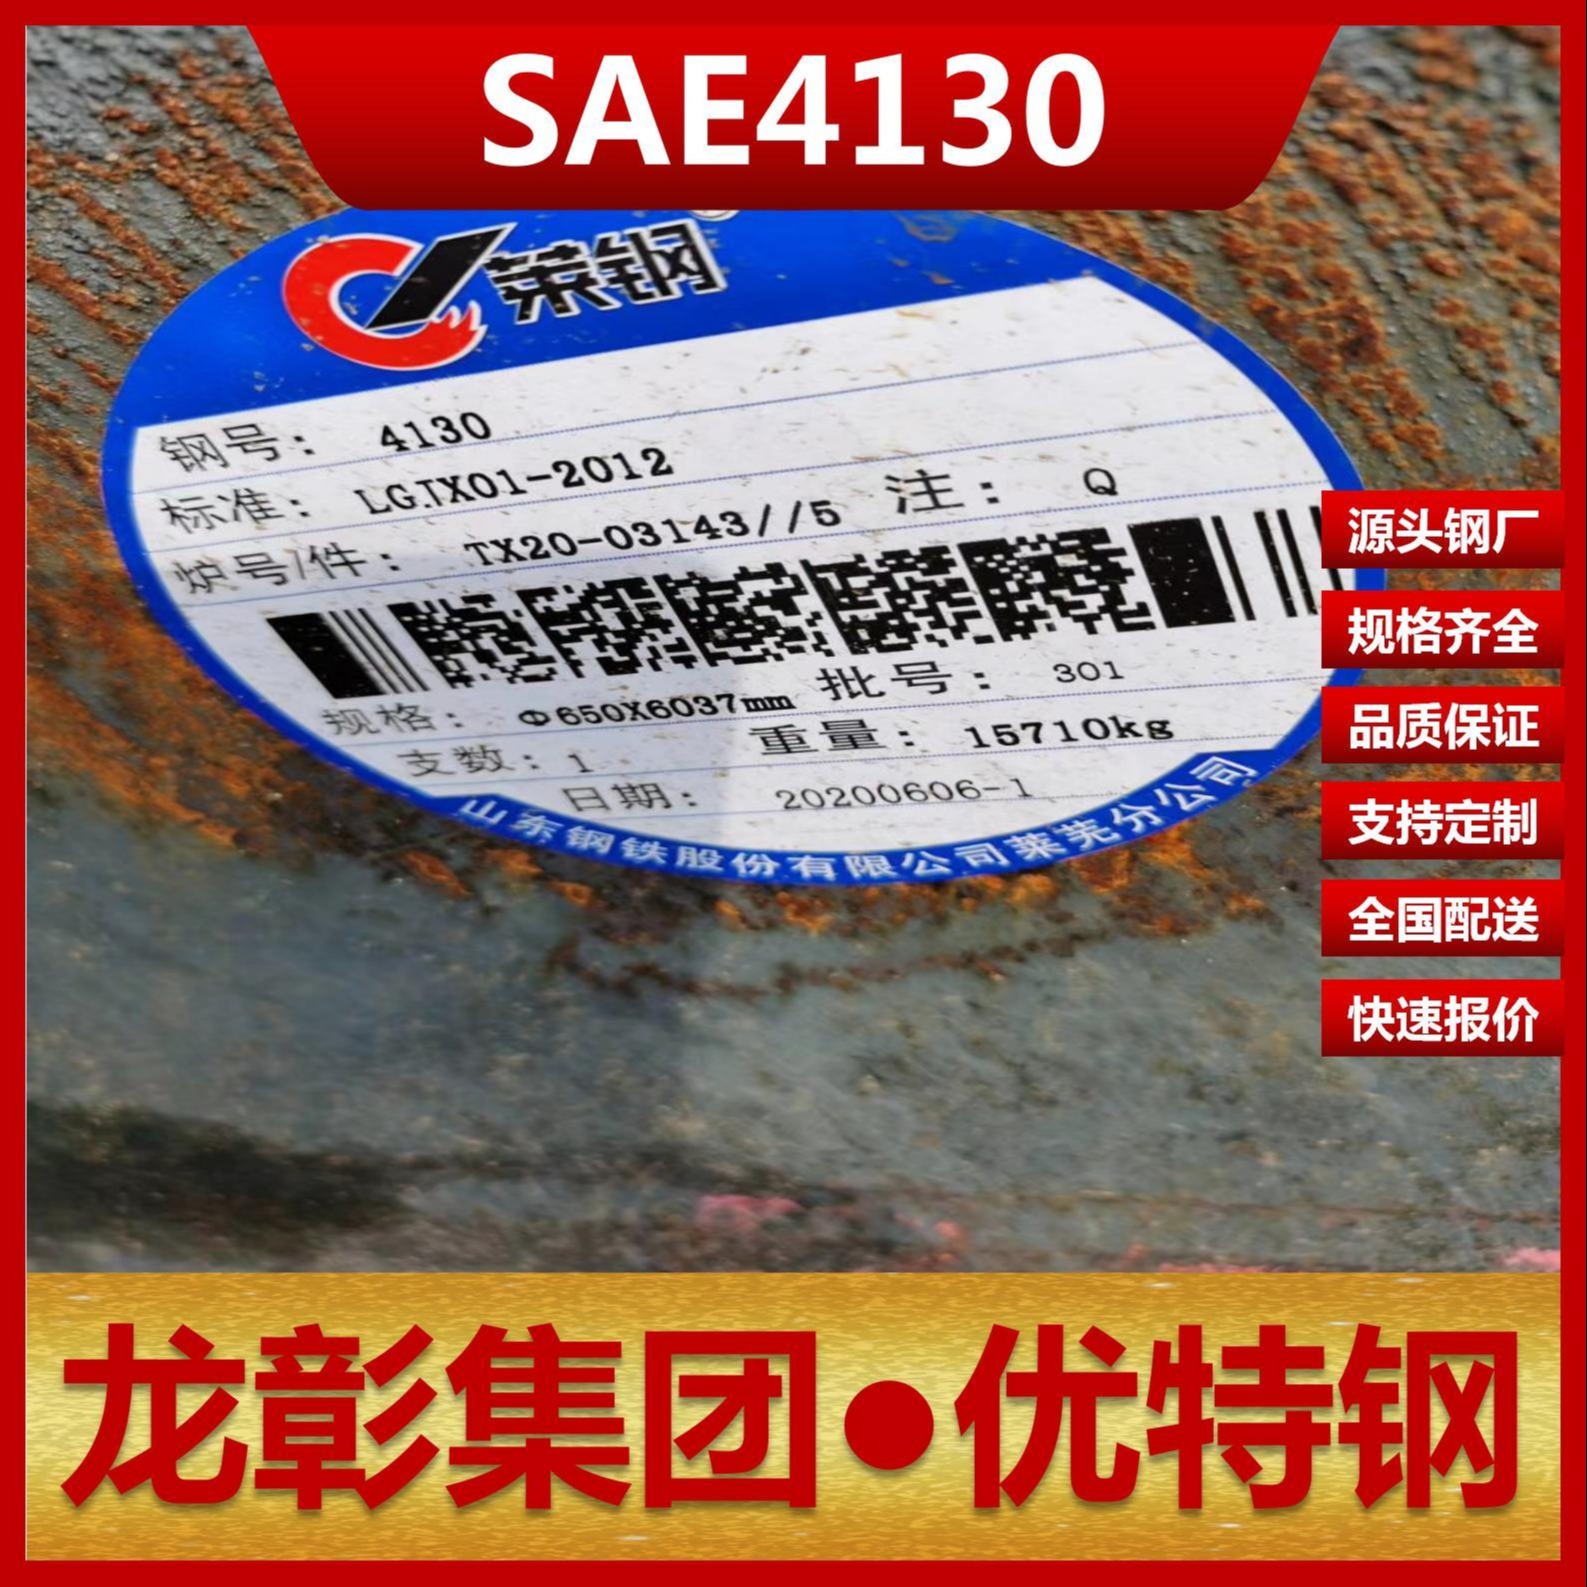 SAE4130圆钢现货批零 龙彰集团主营SAE4130圆钢棒可定制合金钢锻件